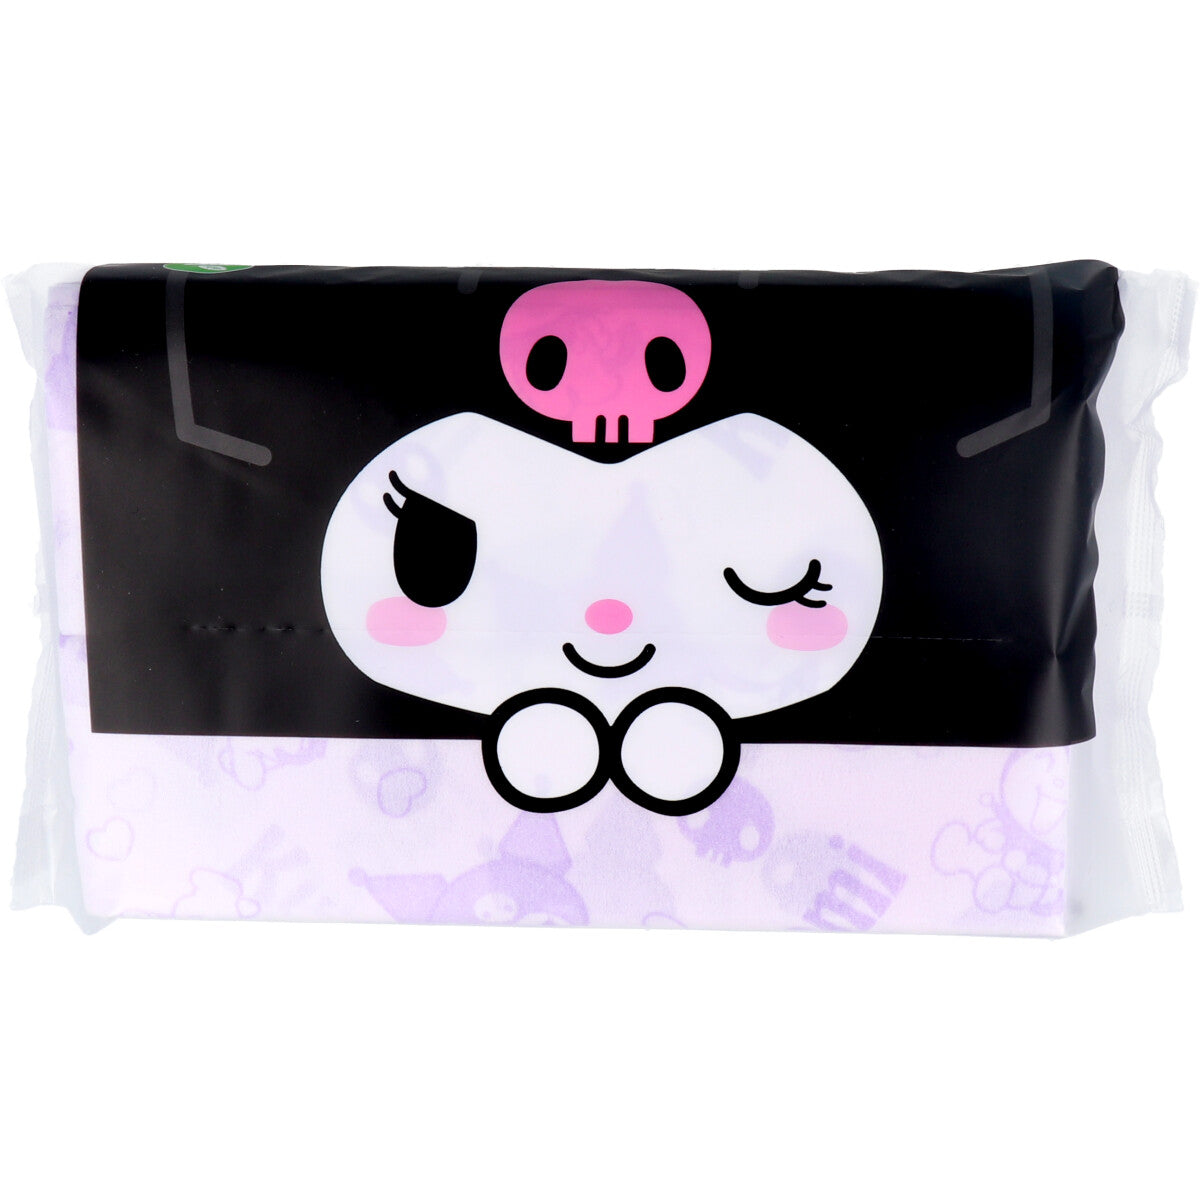 Made in Japan Kuromi/Kuromi cute purple bagged tissues 200 pieces